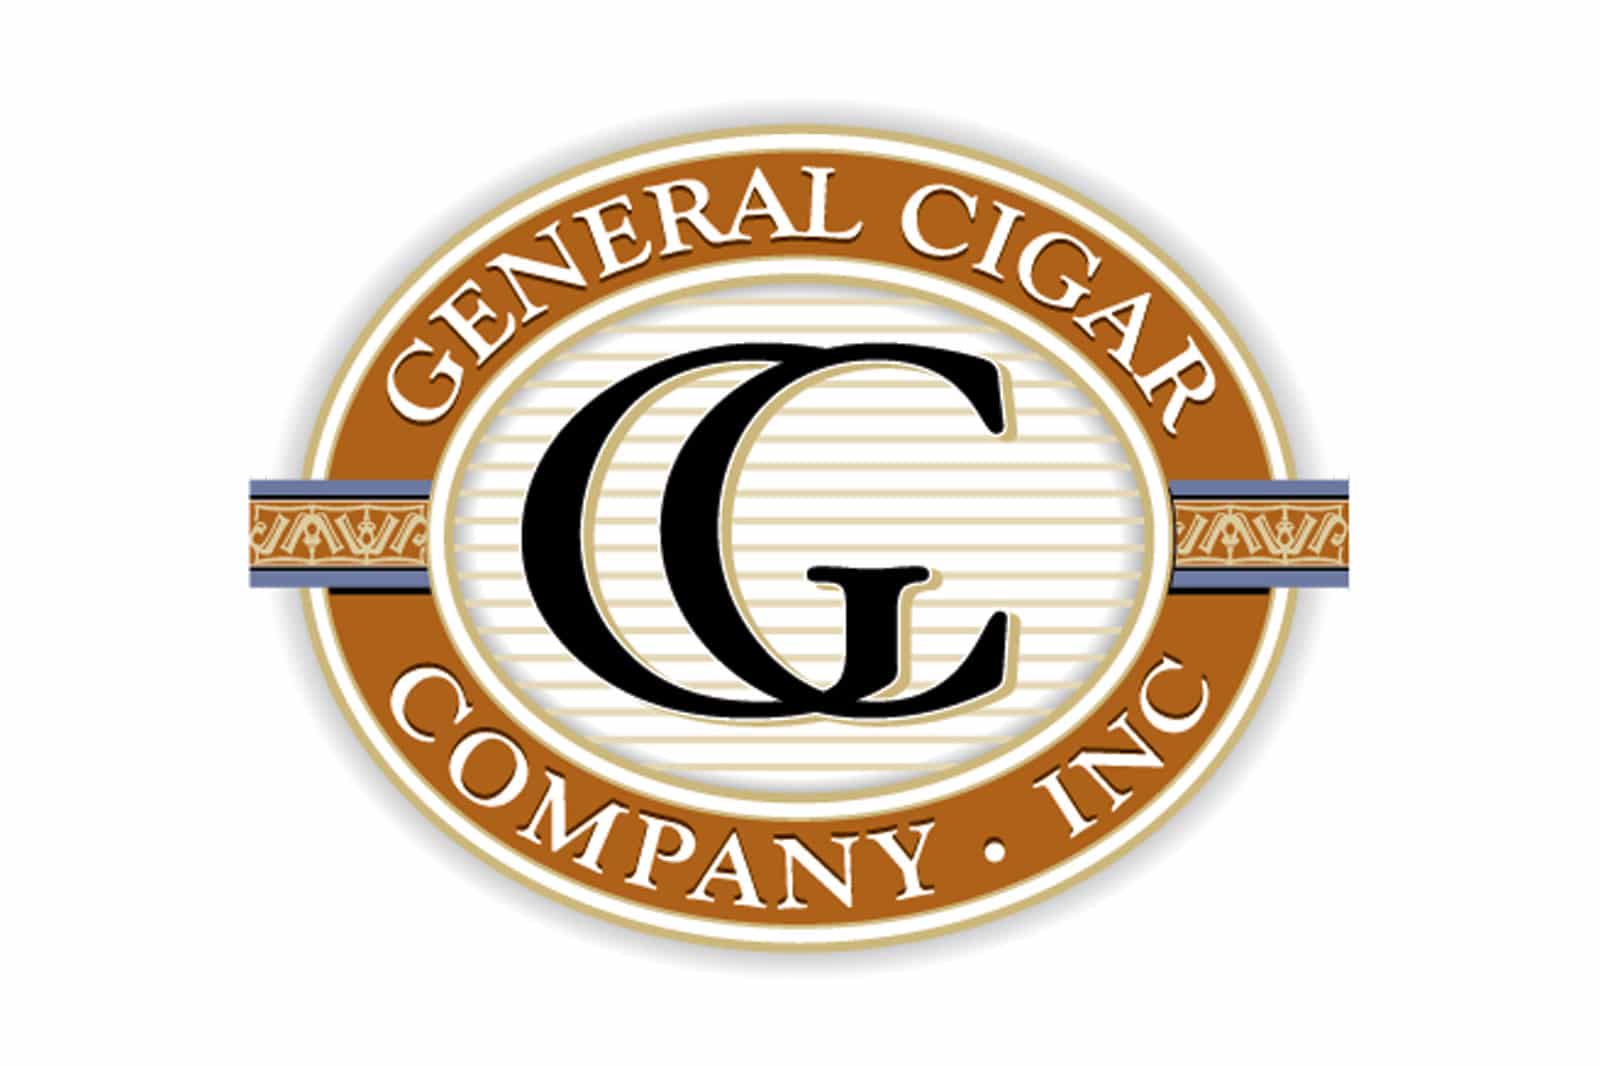 General Cigar Company logo